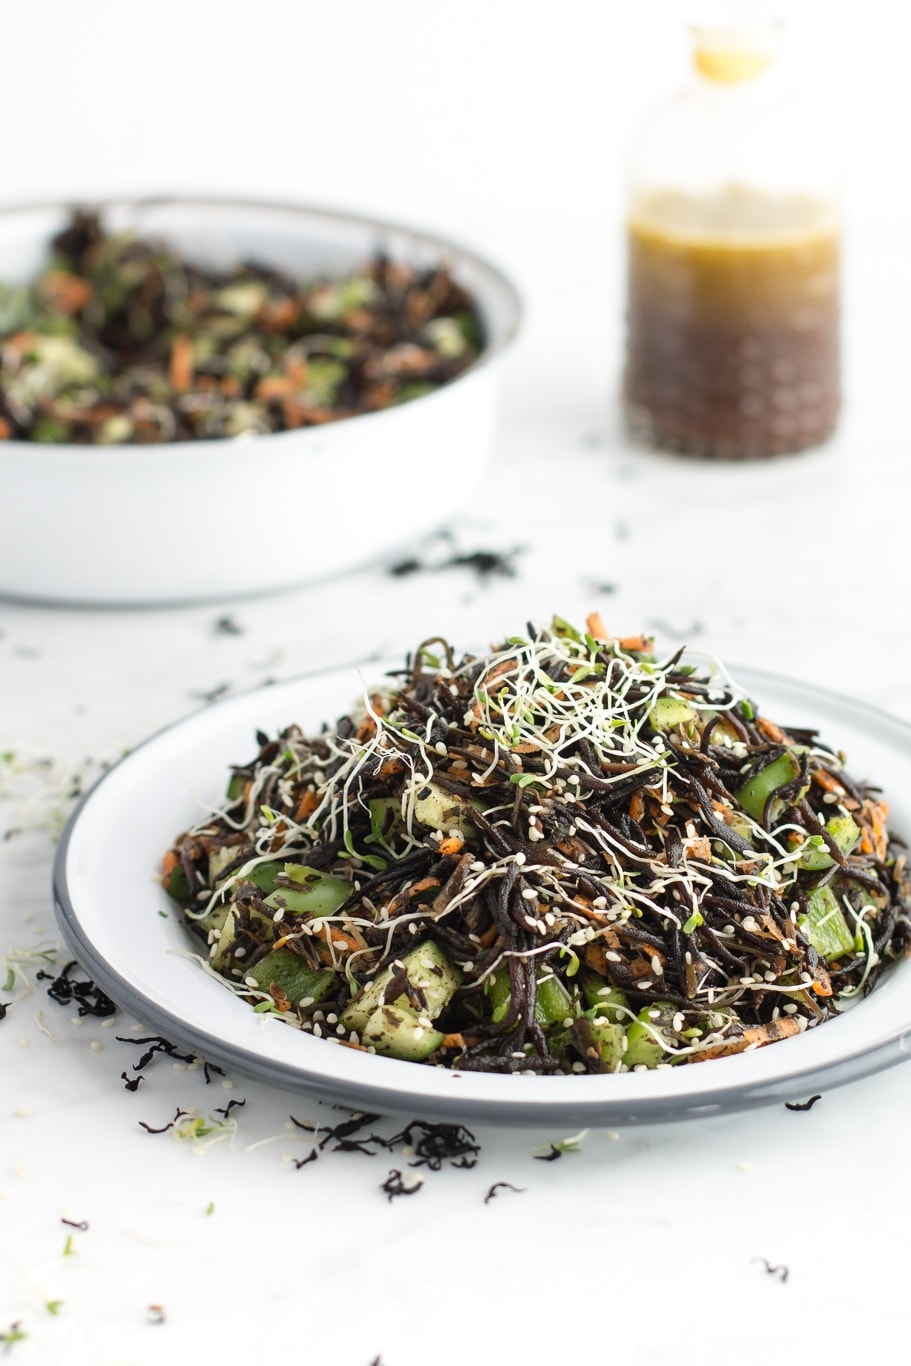 Seaweed-Vegetable Salad With Ginger-Lemon Dressing Recipe - Very Good Cook